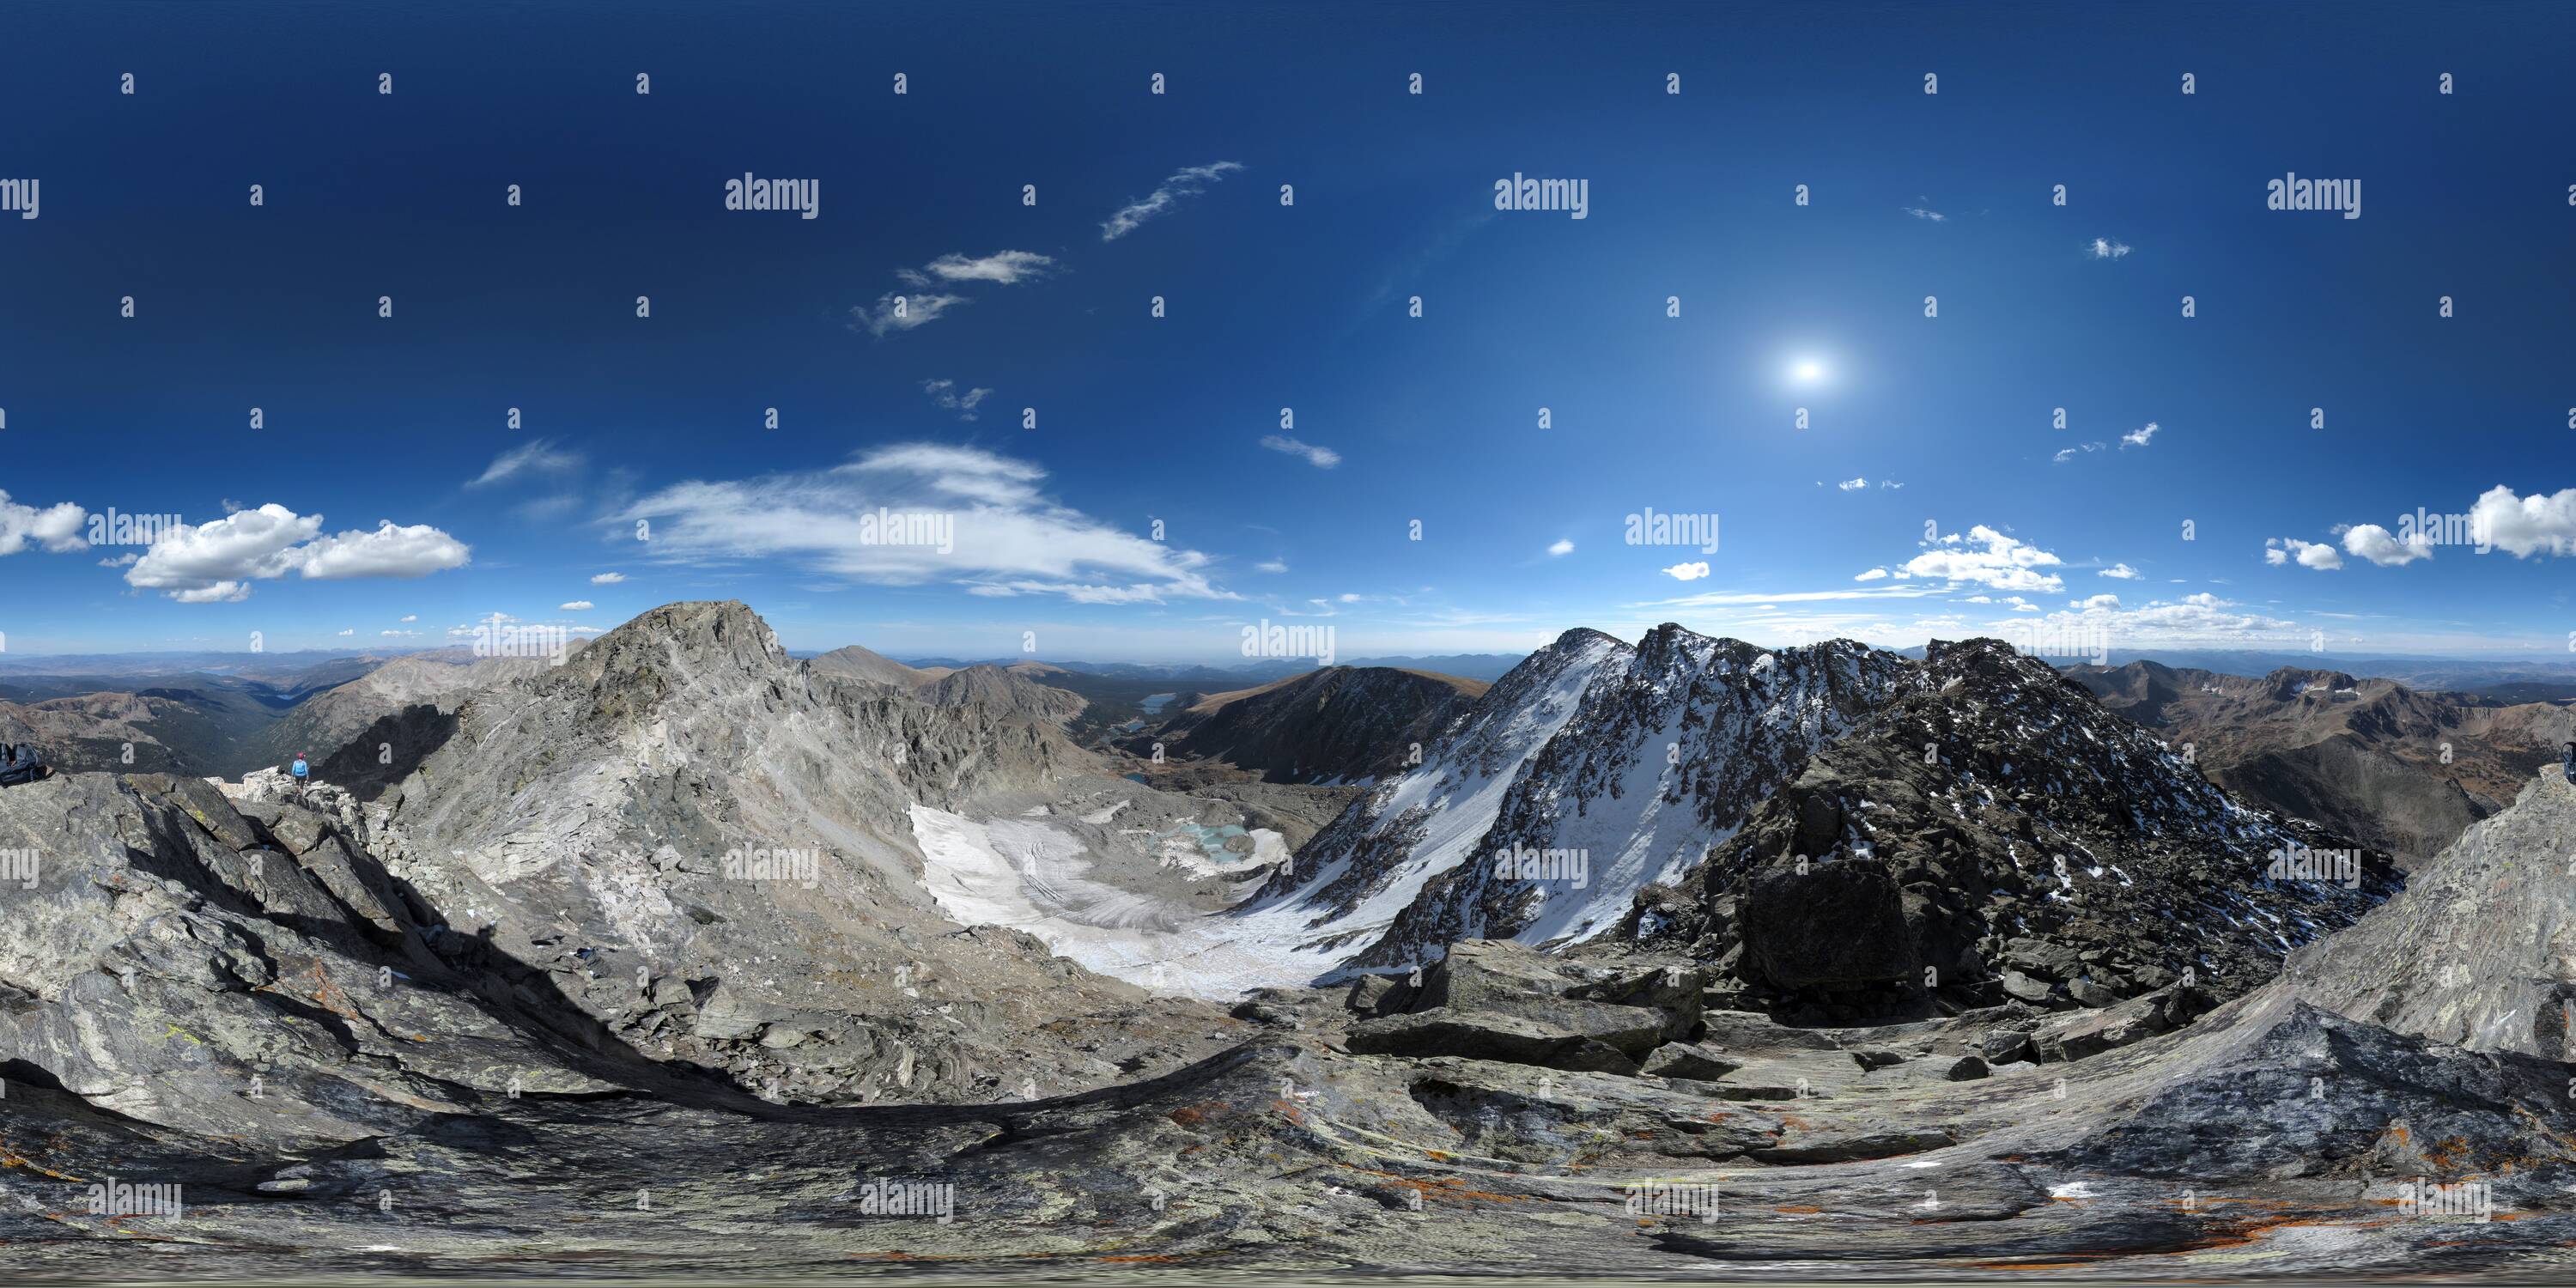 360 degree panoramic view of Arapaho Peak traverse